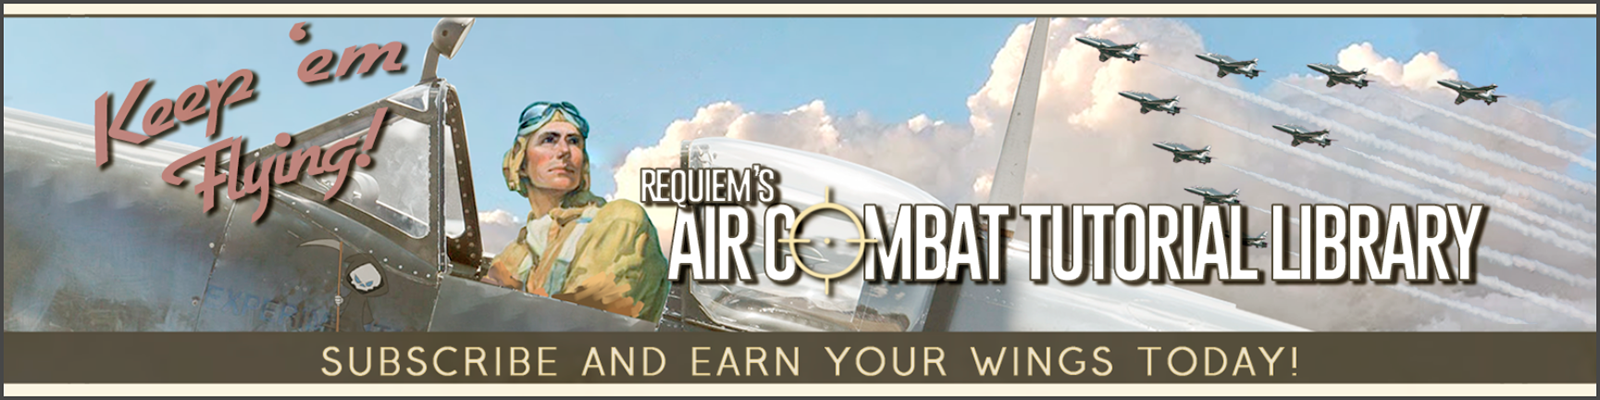 Requiem's Air Combat Tutorial Library videot